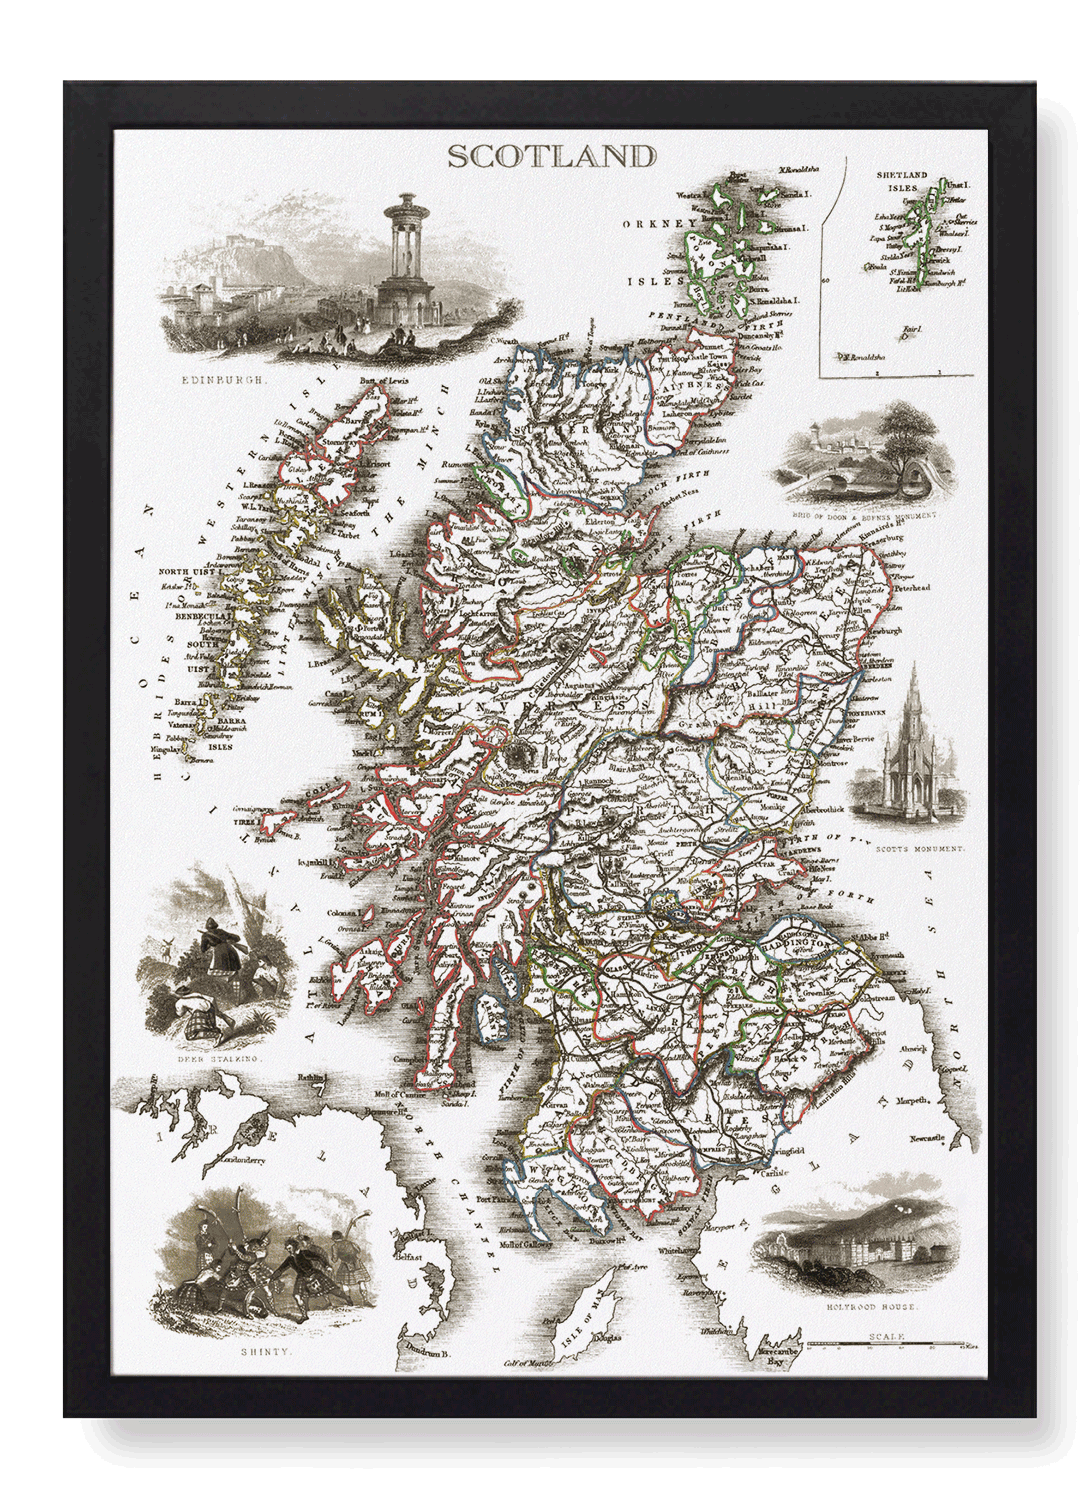 SCOTLAND (1851)